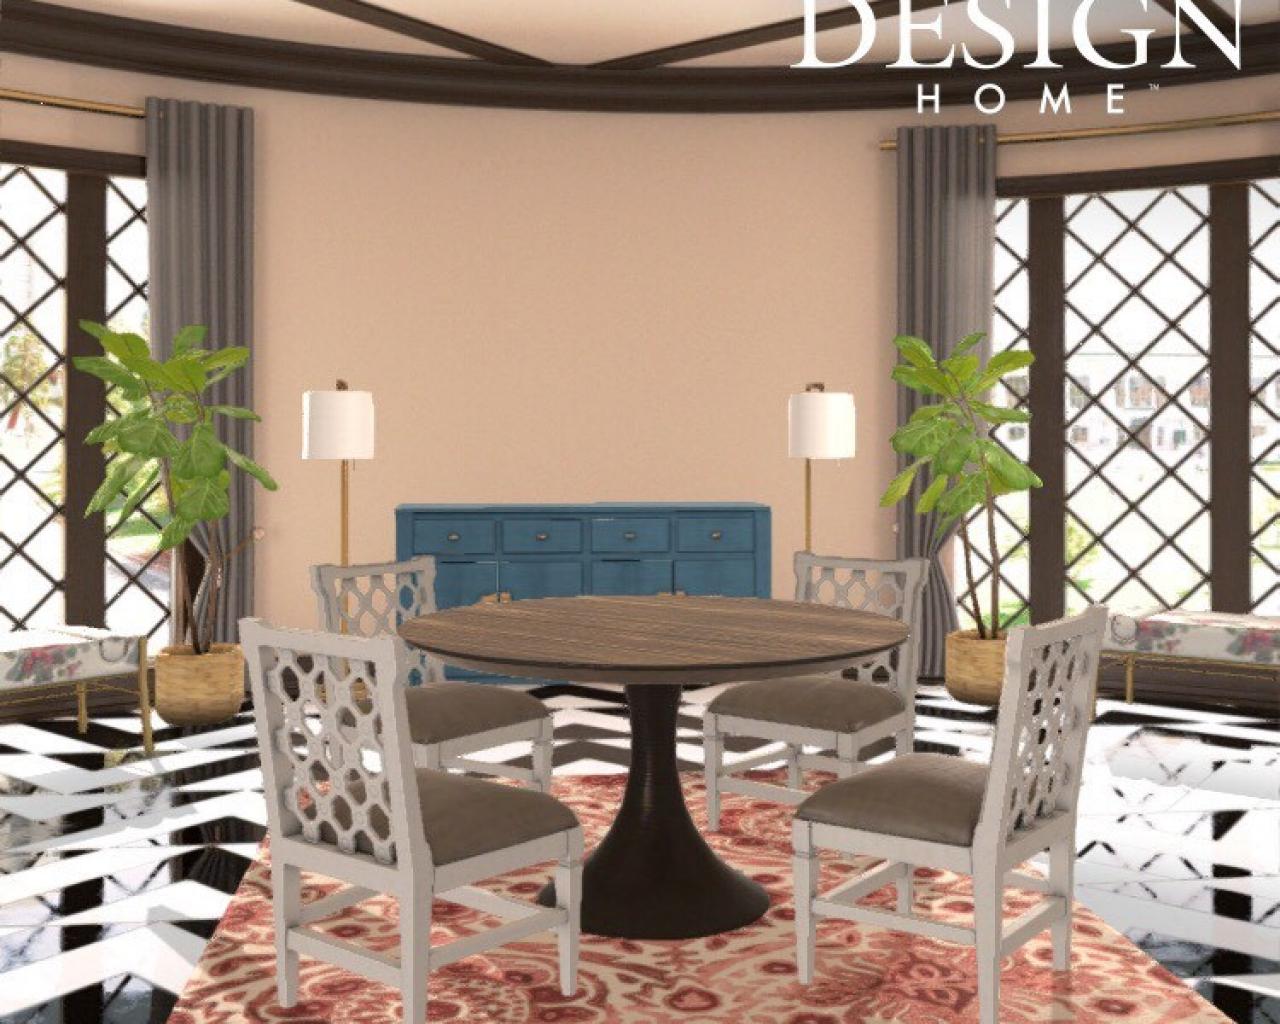  Designer With Design Home App  Decorating and Design Blog  HGTV